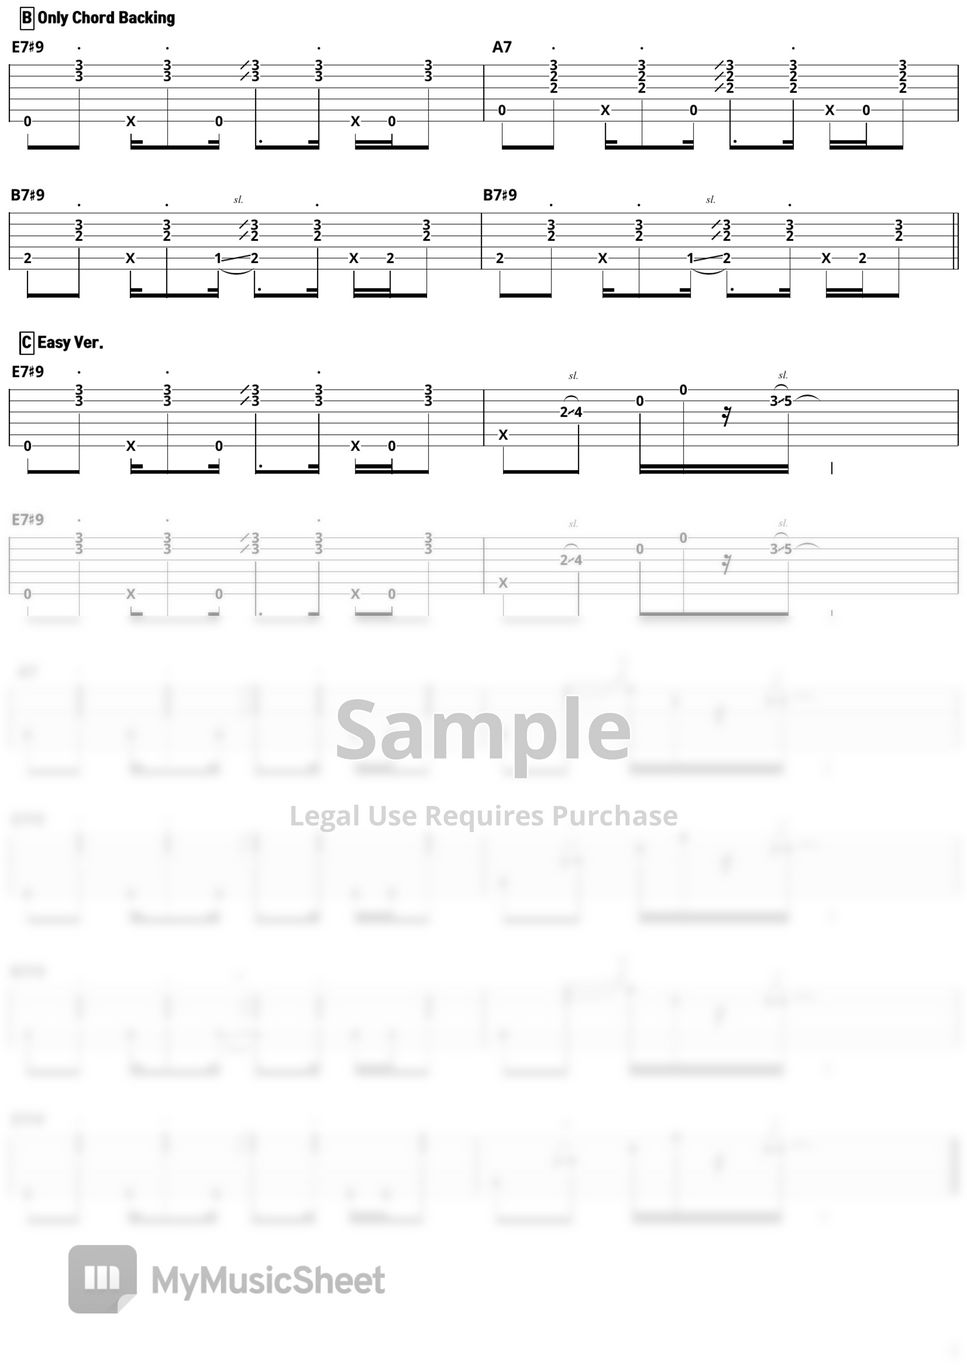 Stevie Ray Vaughan Fingerstyle Blues Guitar Lesson PART 3 TABSㅣ 블루스기타 레슨 3 타브악보 스윗기타스쿨